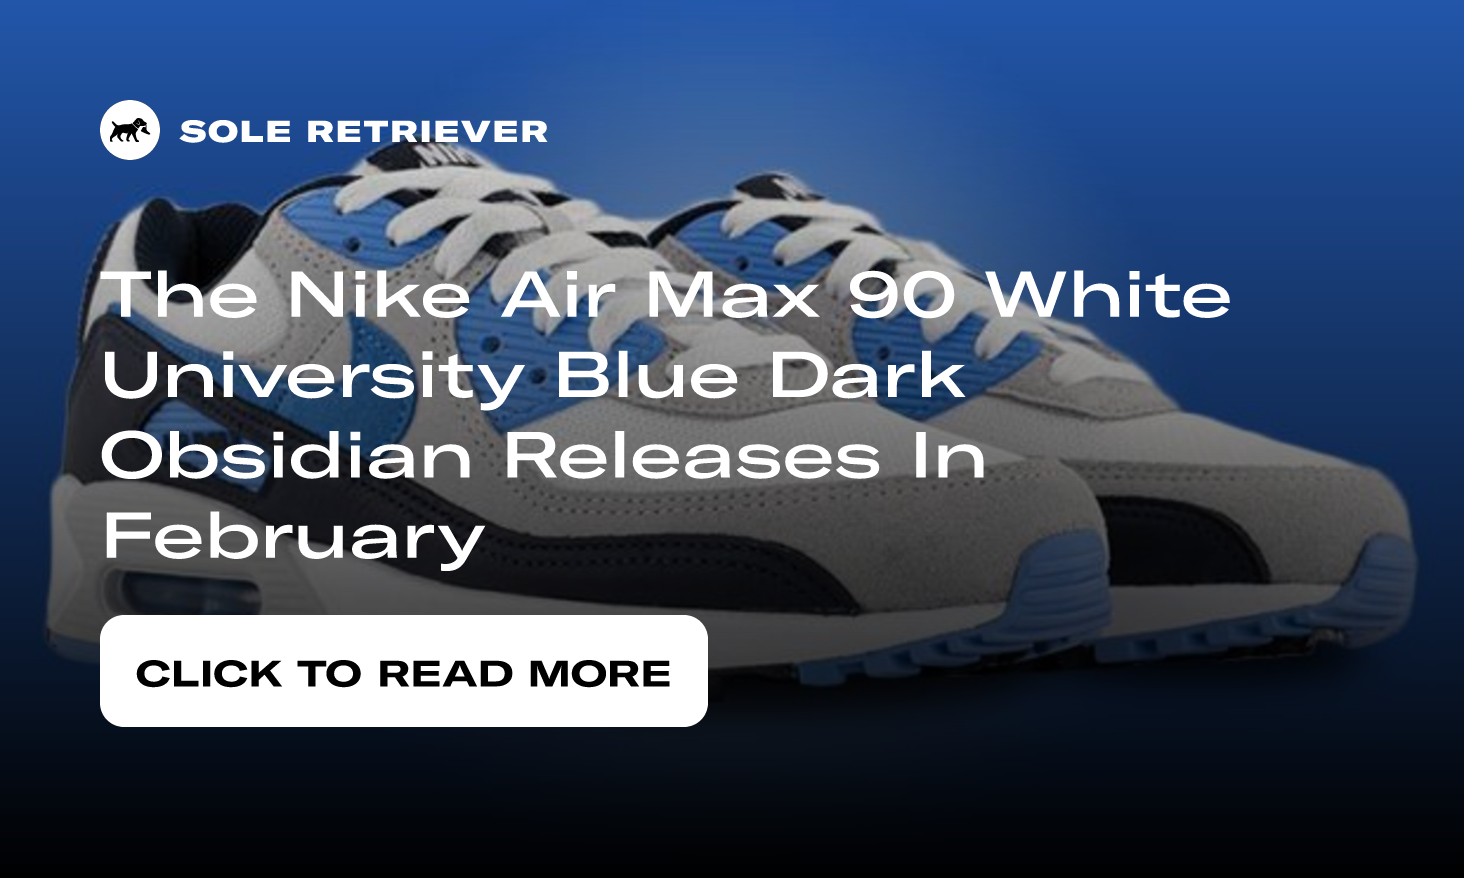 The Nike Air Max 90 White University Blue Dark Obsidian Releases